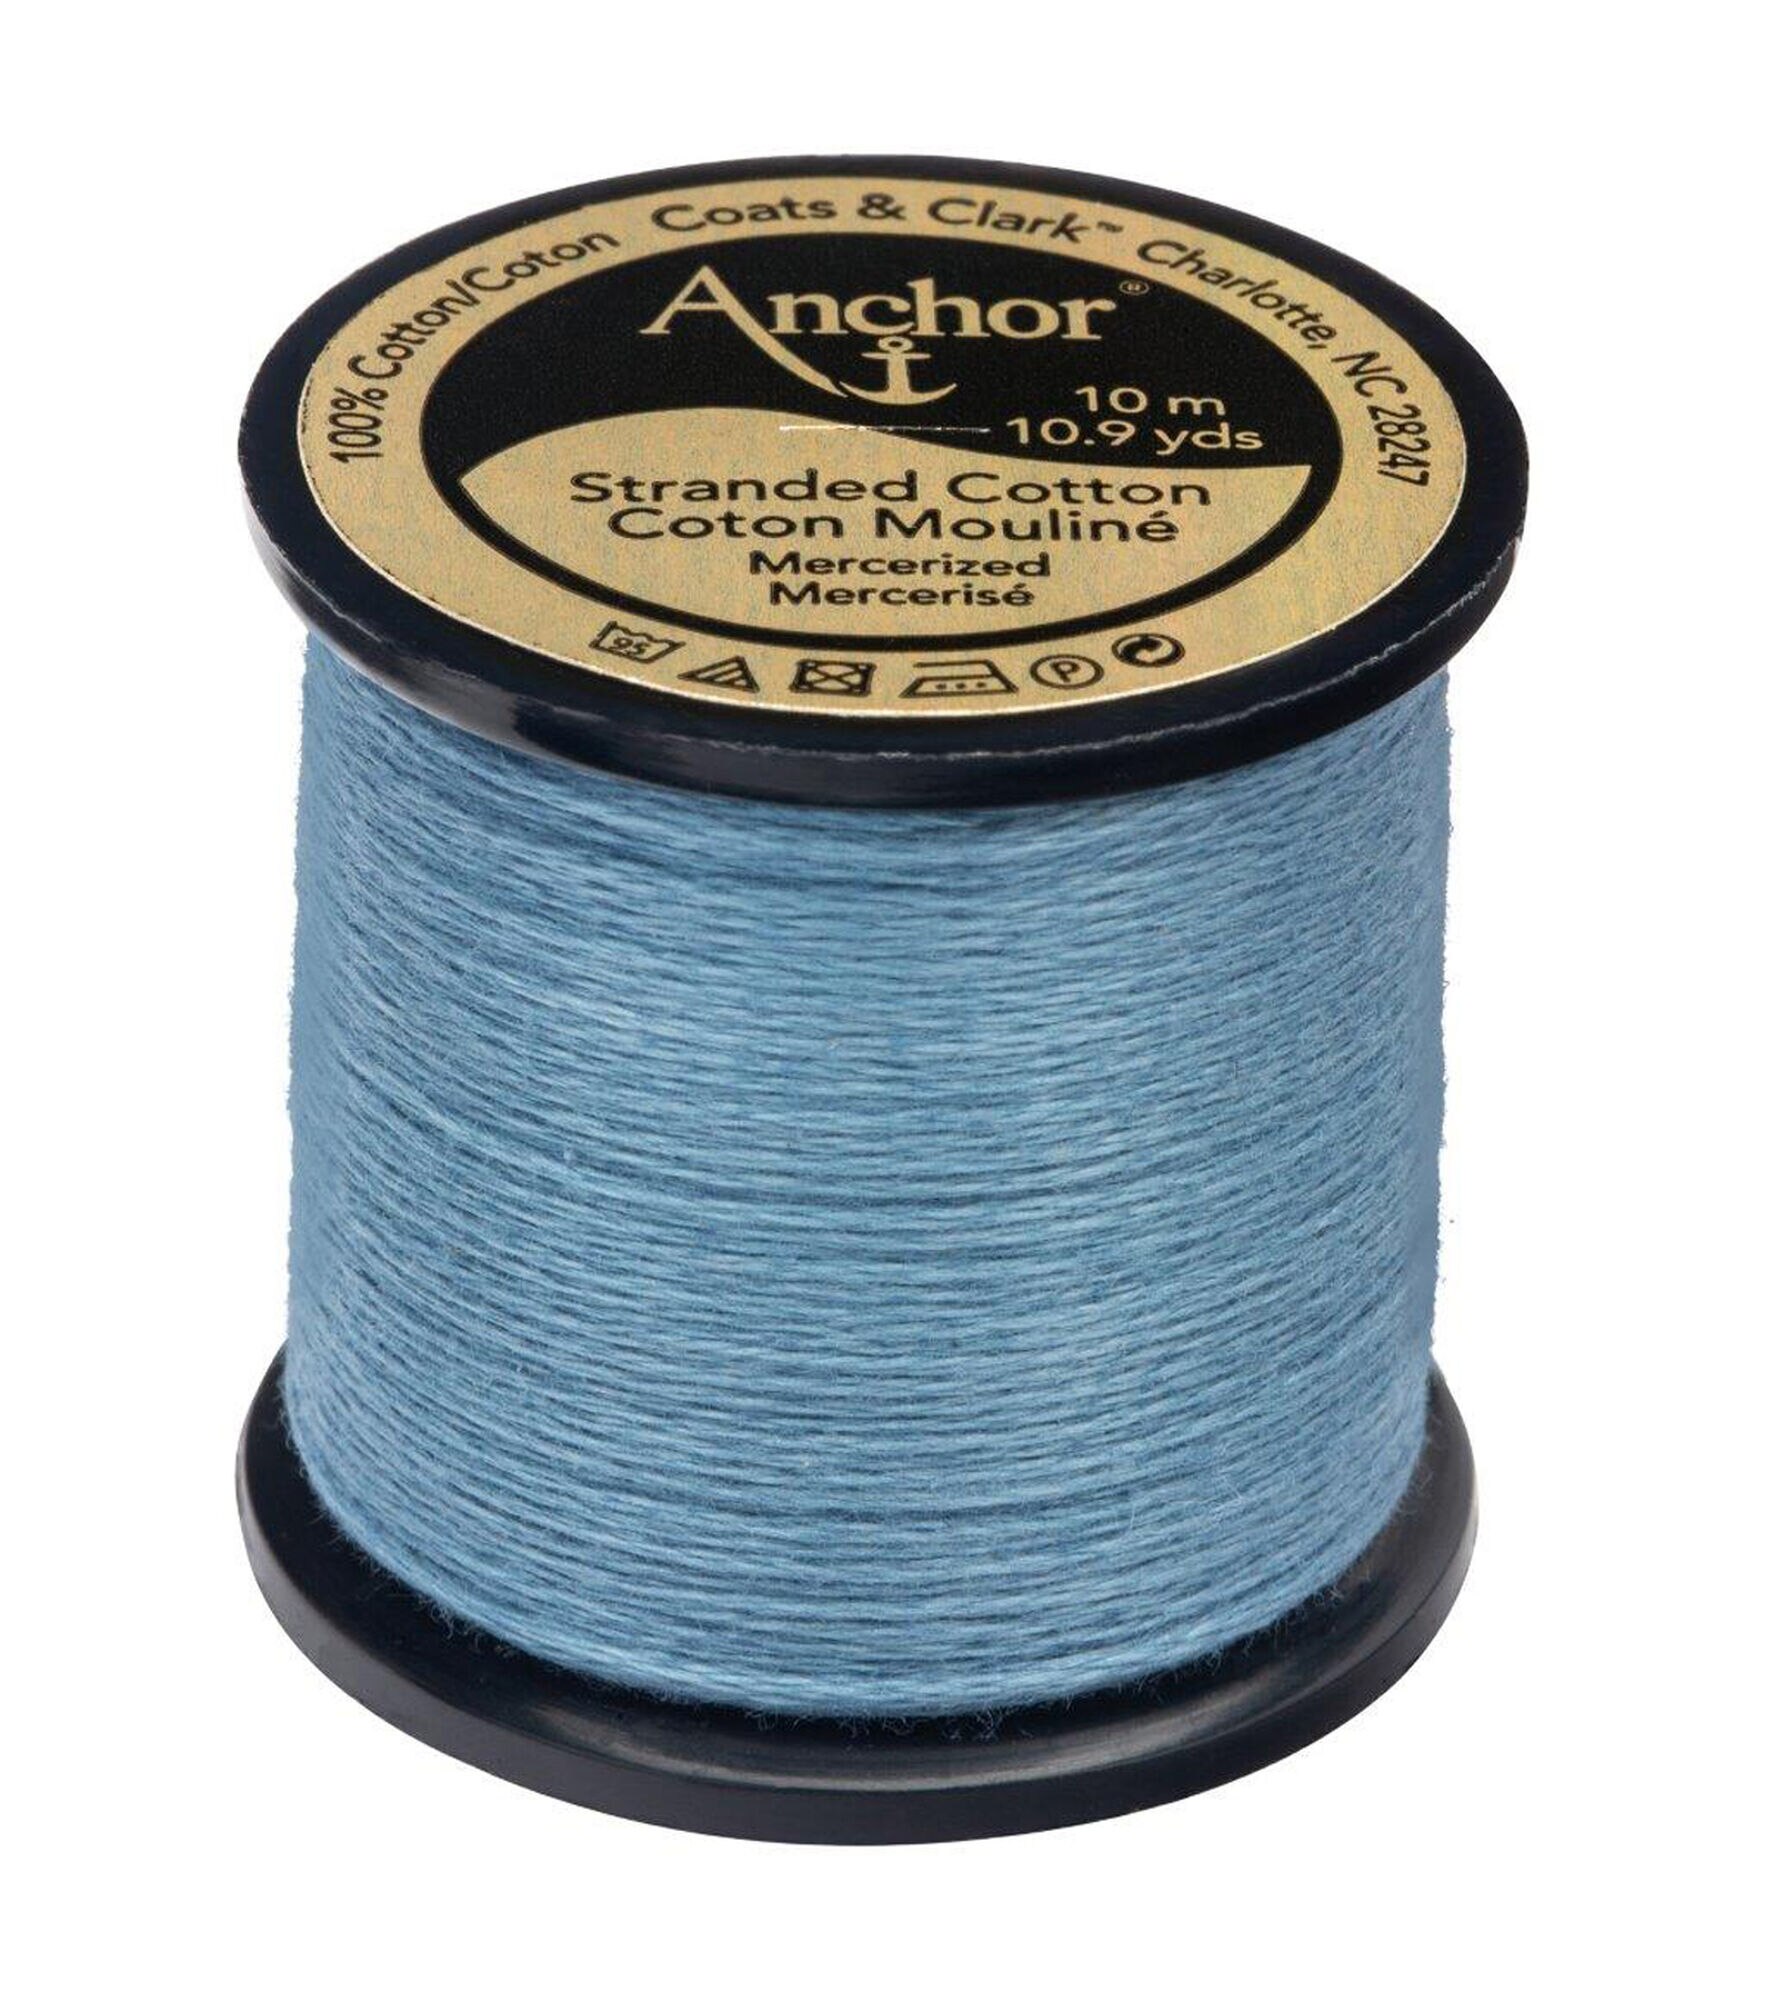 Anchor Cotton 10.9yd Blues Cotton Embroidery Floss, 1034 Antique Blue Medium, hi-res